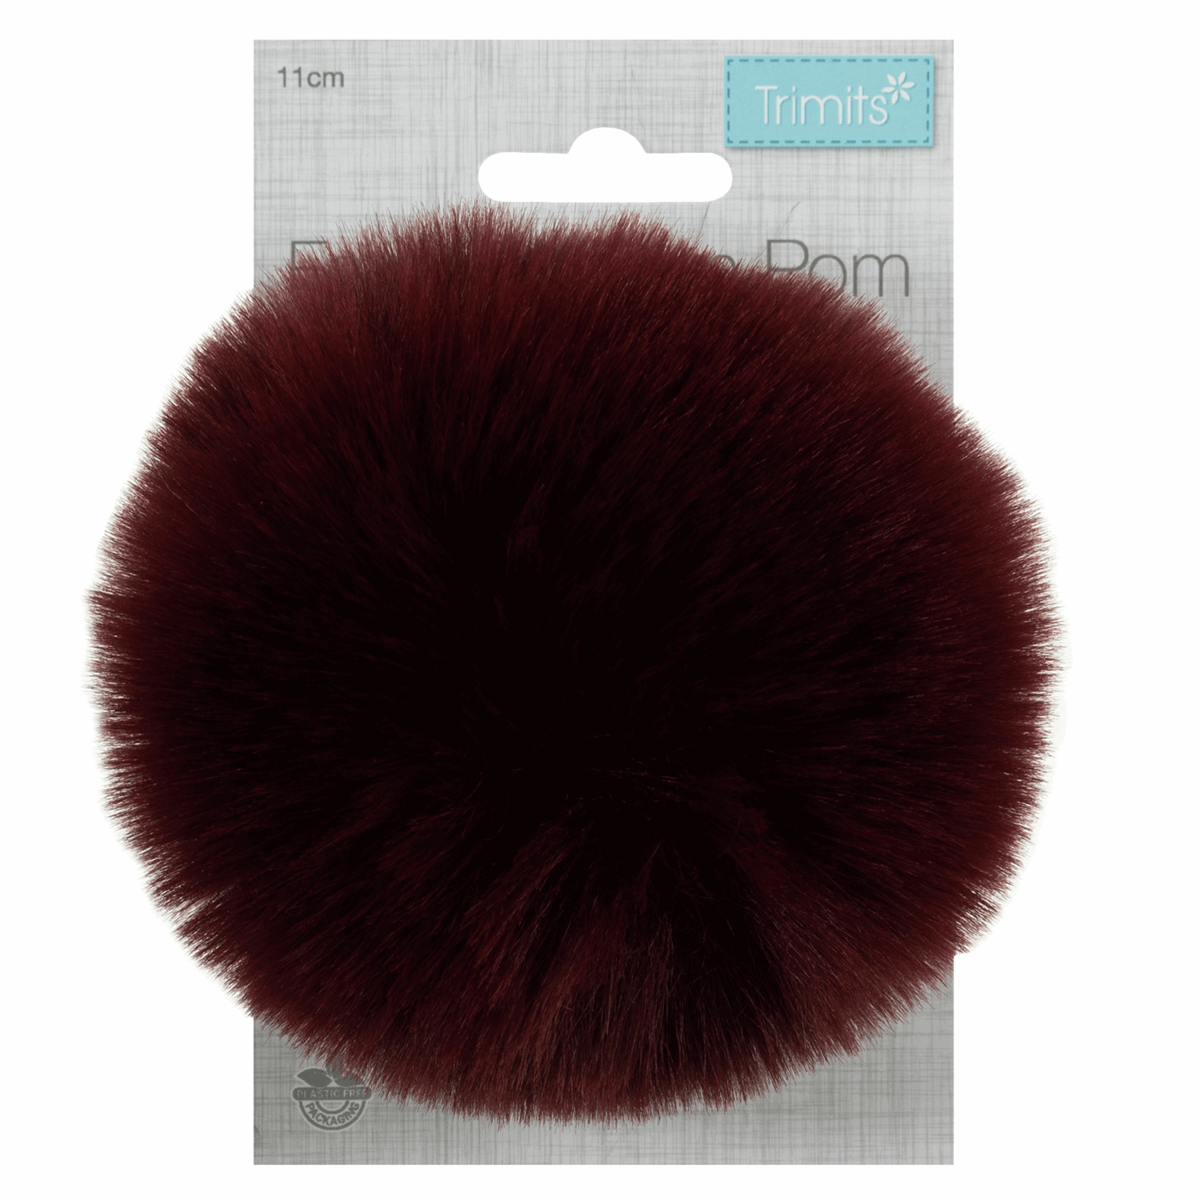 Trimits Faux Fur Super Fluffy Pom Pom - Burgundy 11cm